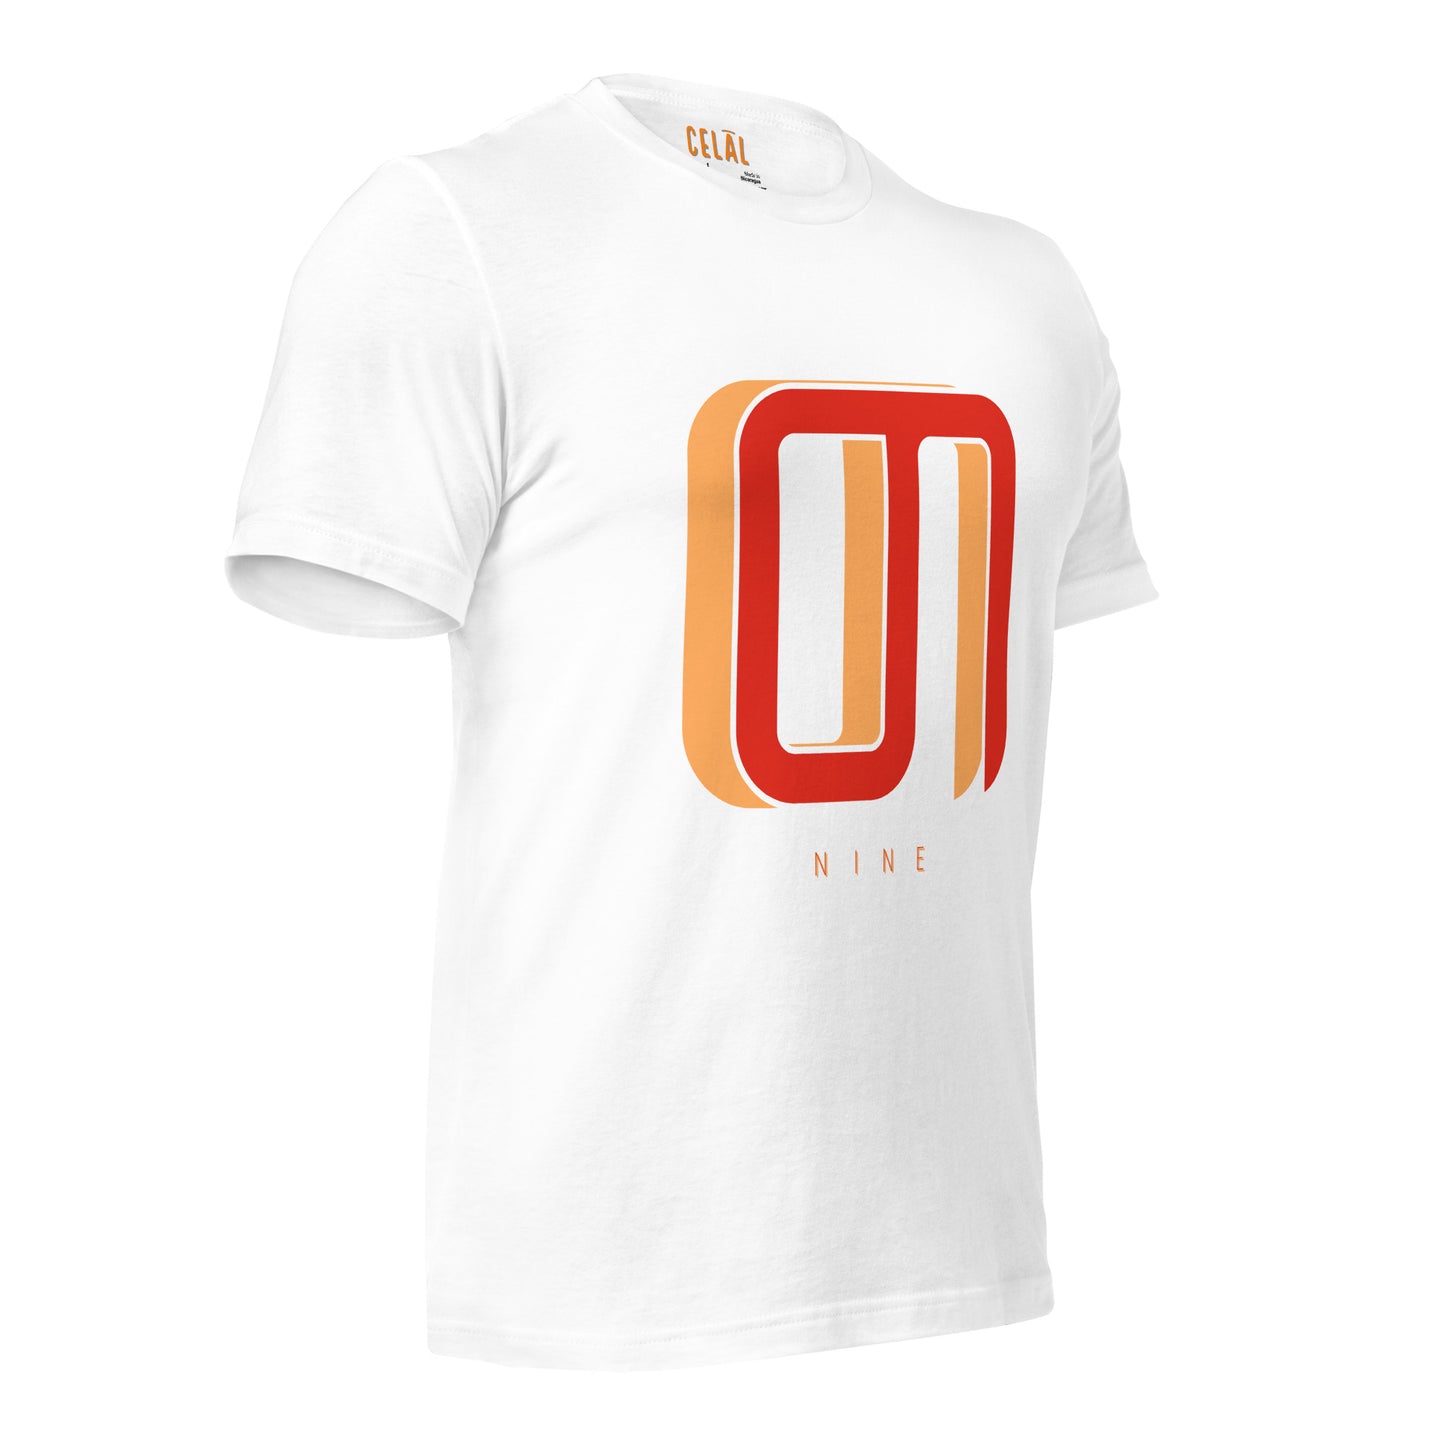 9 Unisex t-shirt